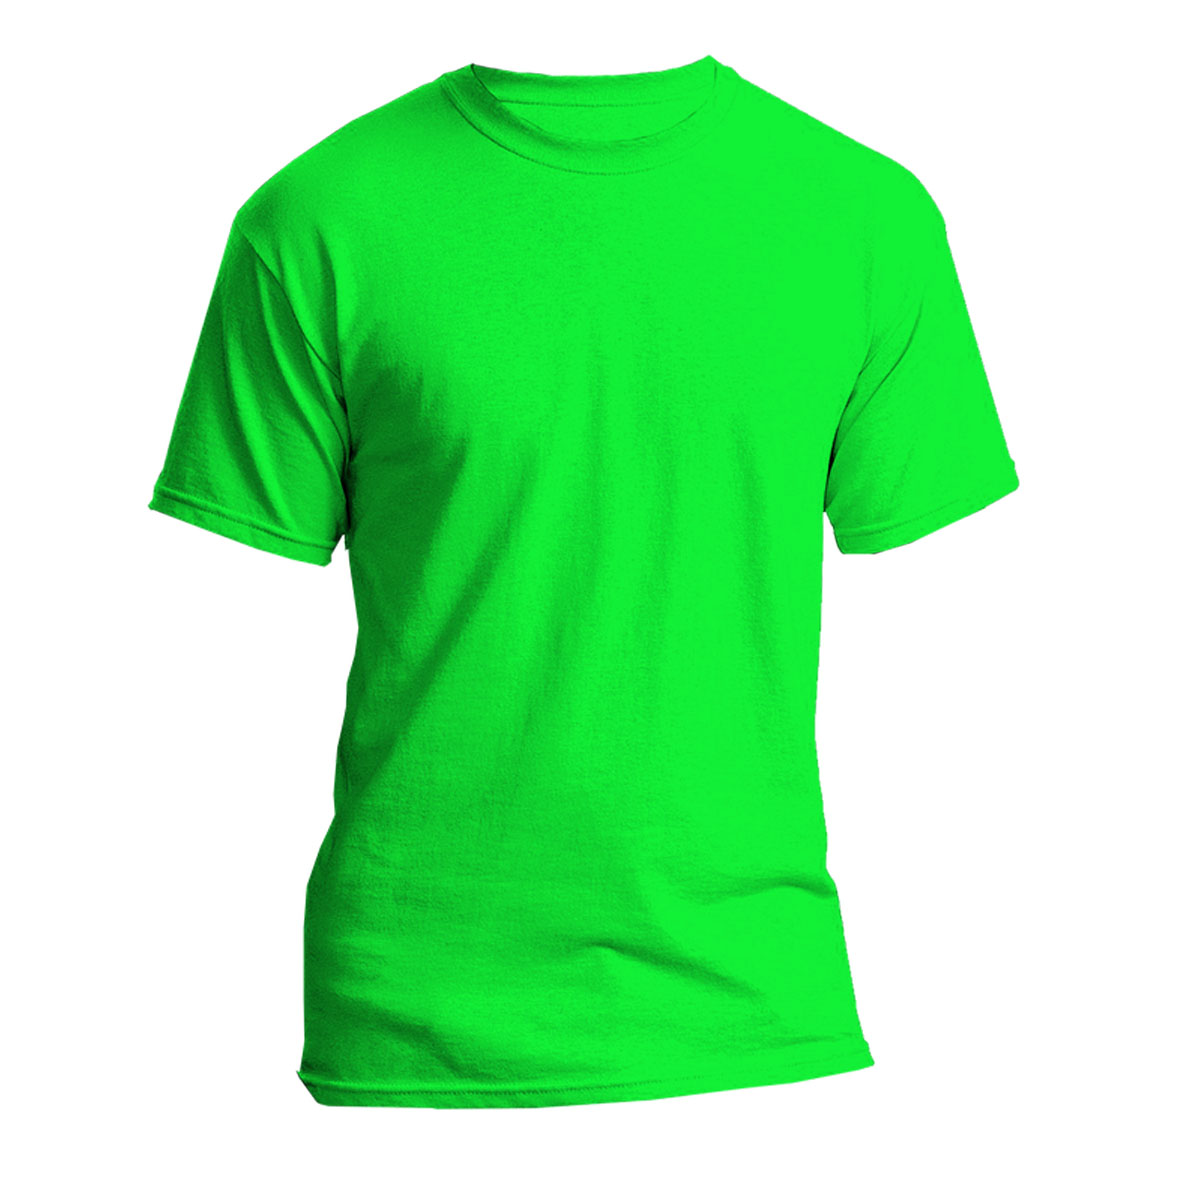 Lime t shirt